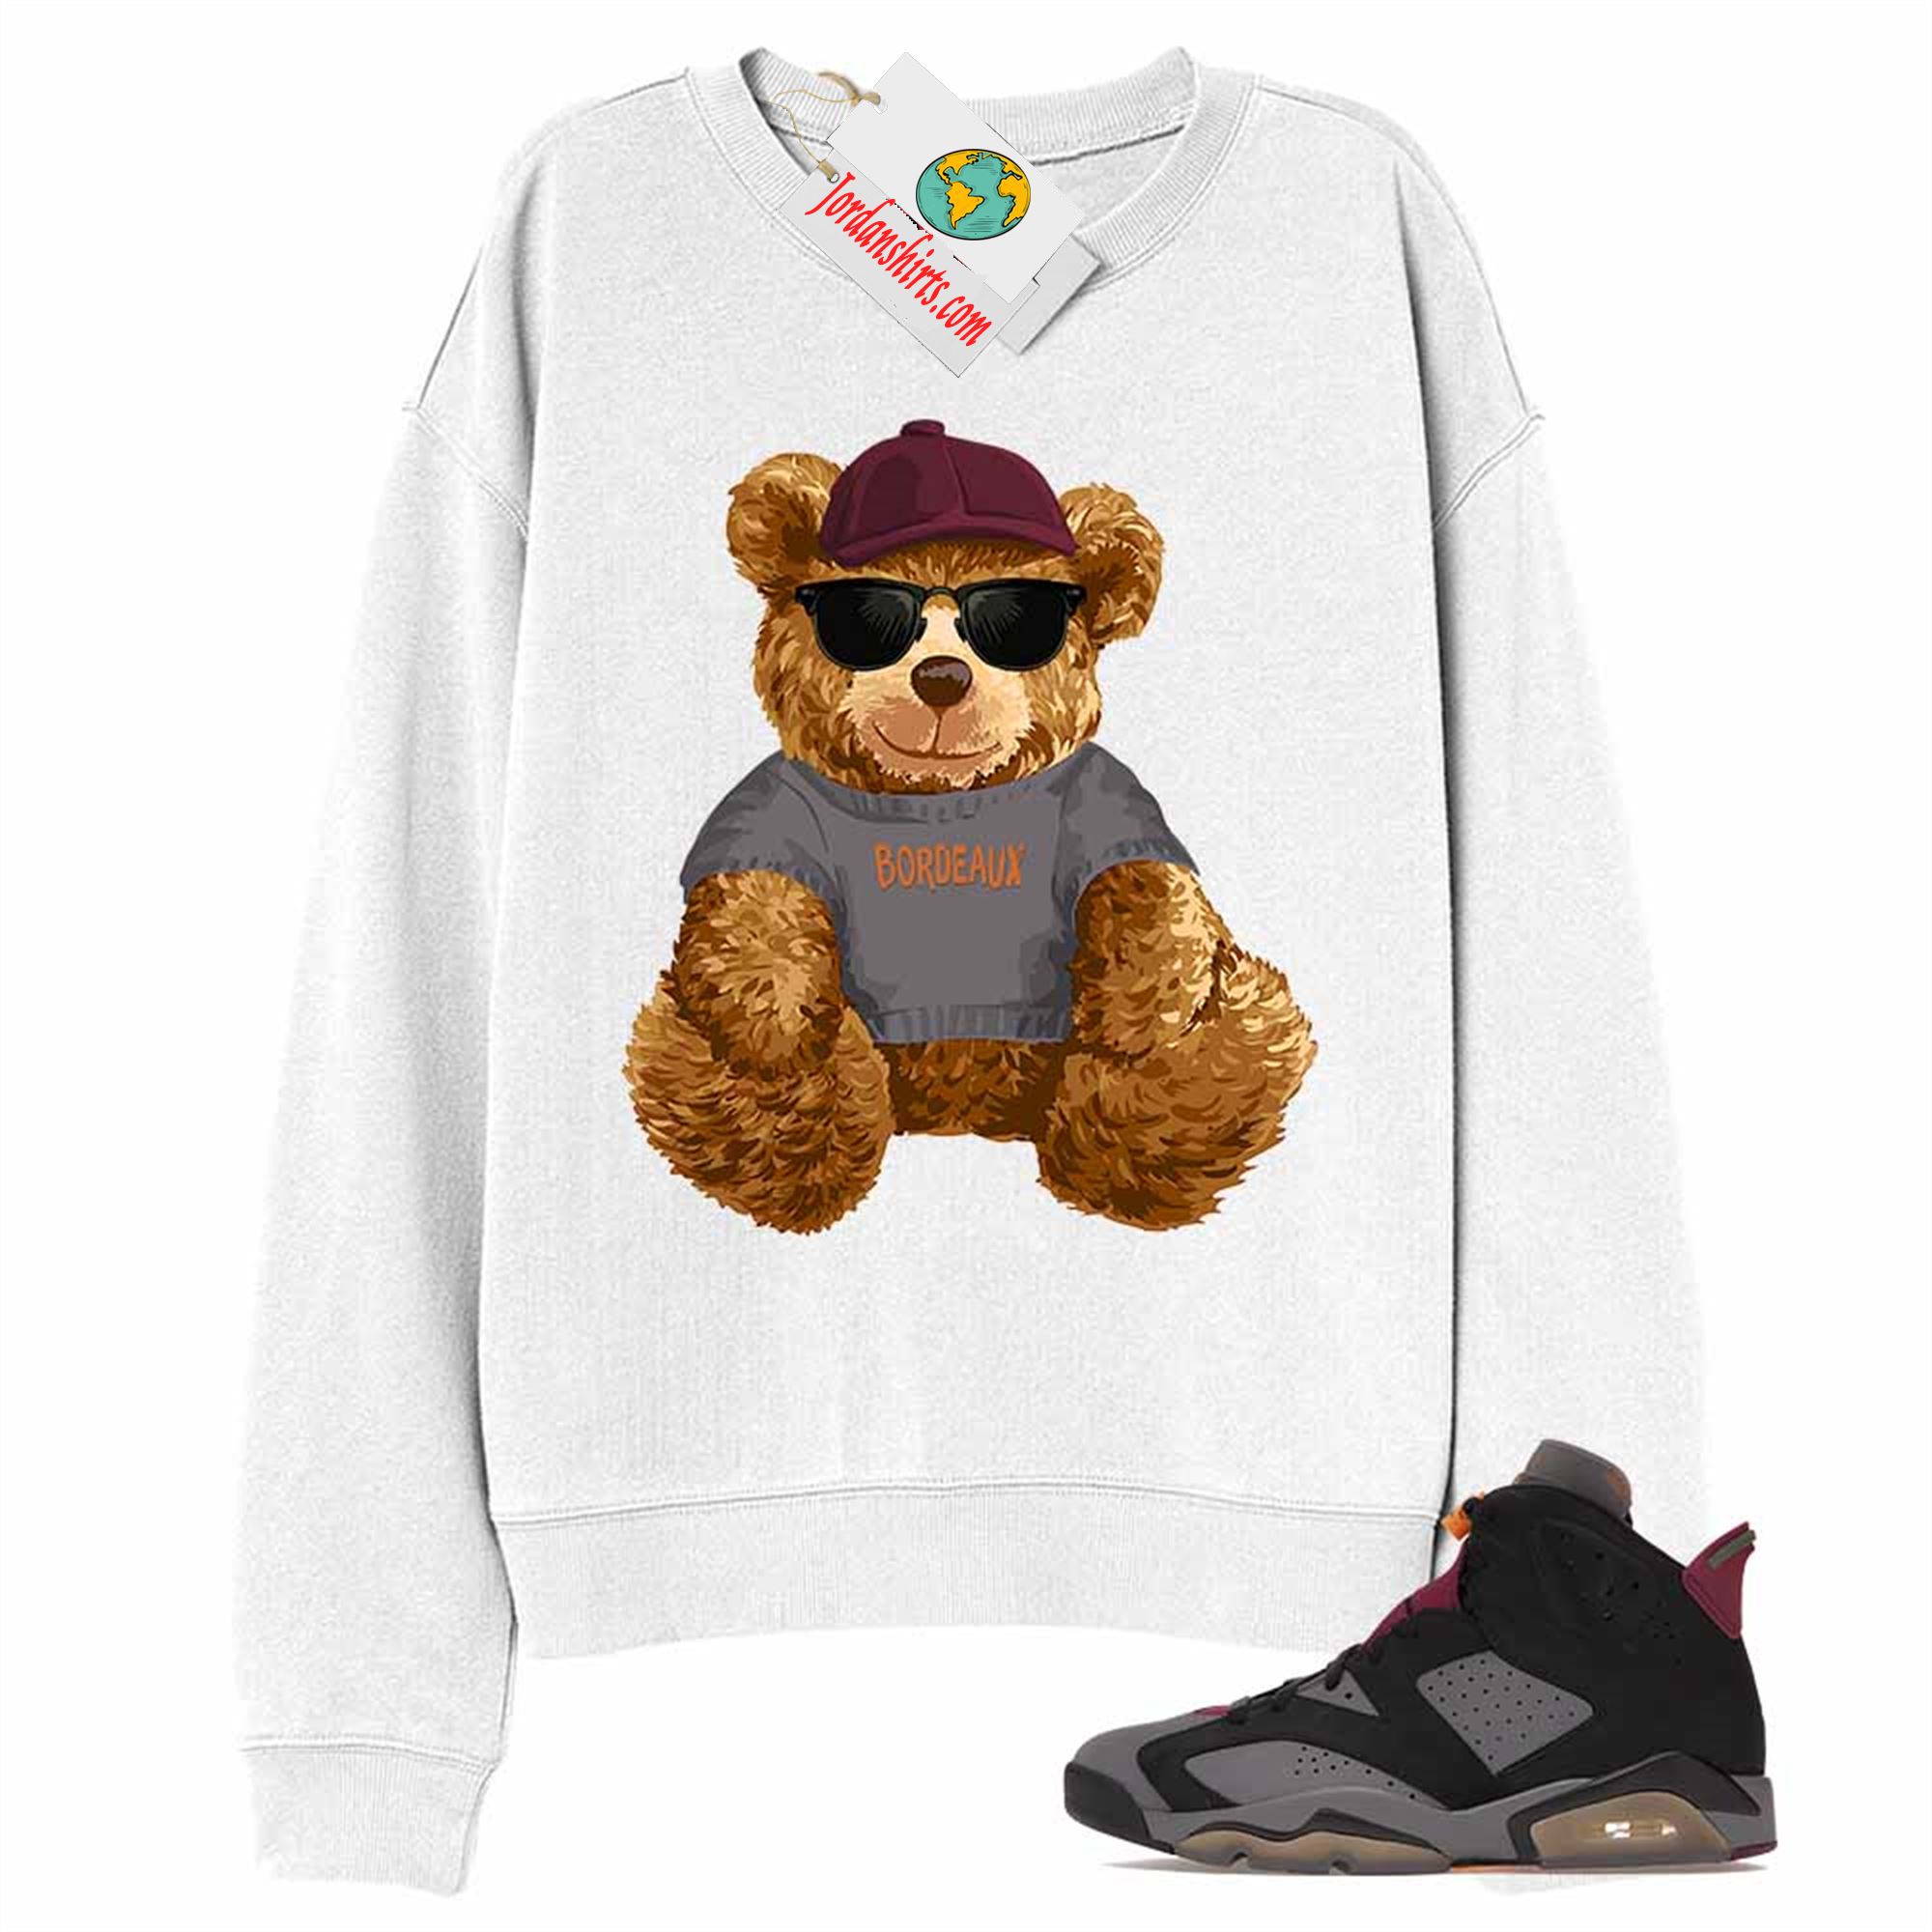 Jordan 6 Sweatshirt, Teddy Bear With Sunglasses _ Hat White Sweatshirt Air Jordan 6 Bordeaux 6s Size Up To 5xl